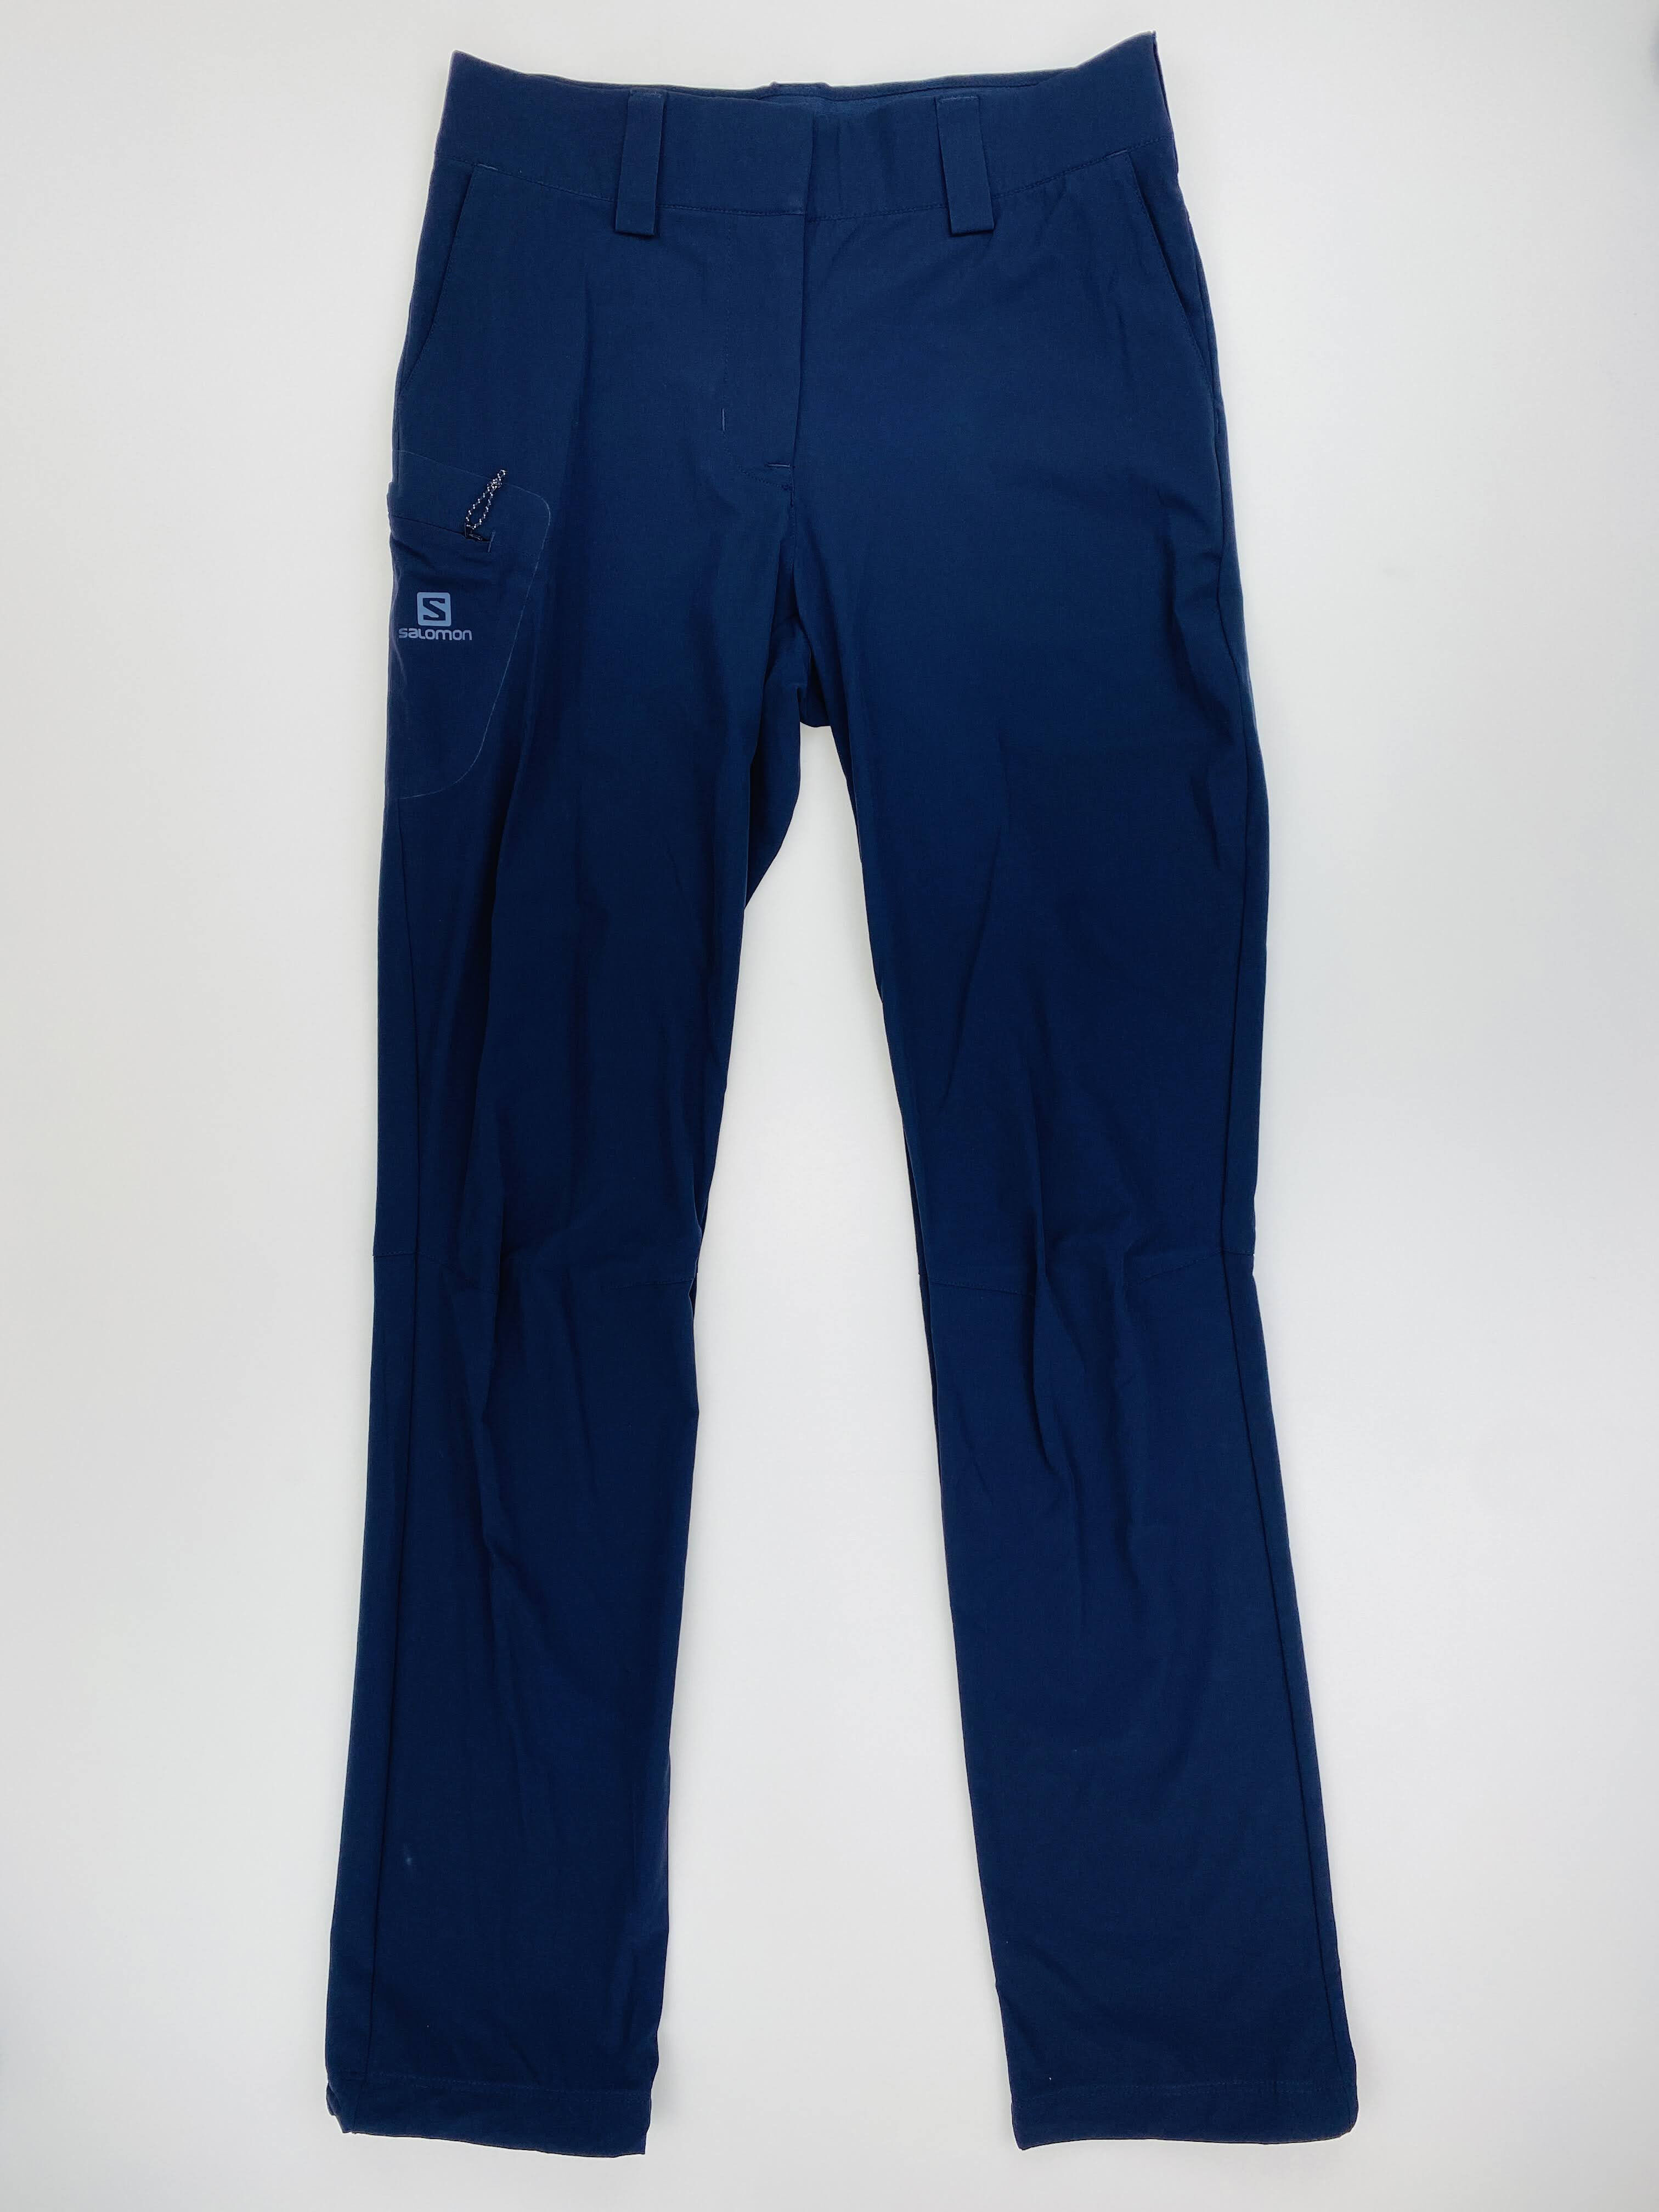 Salomon Pants Exo Motion Long Tight - Seconde main Pantalon randonnée homme - Bleu - XS | Hardloop